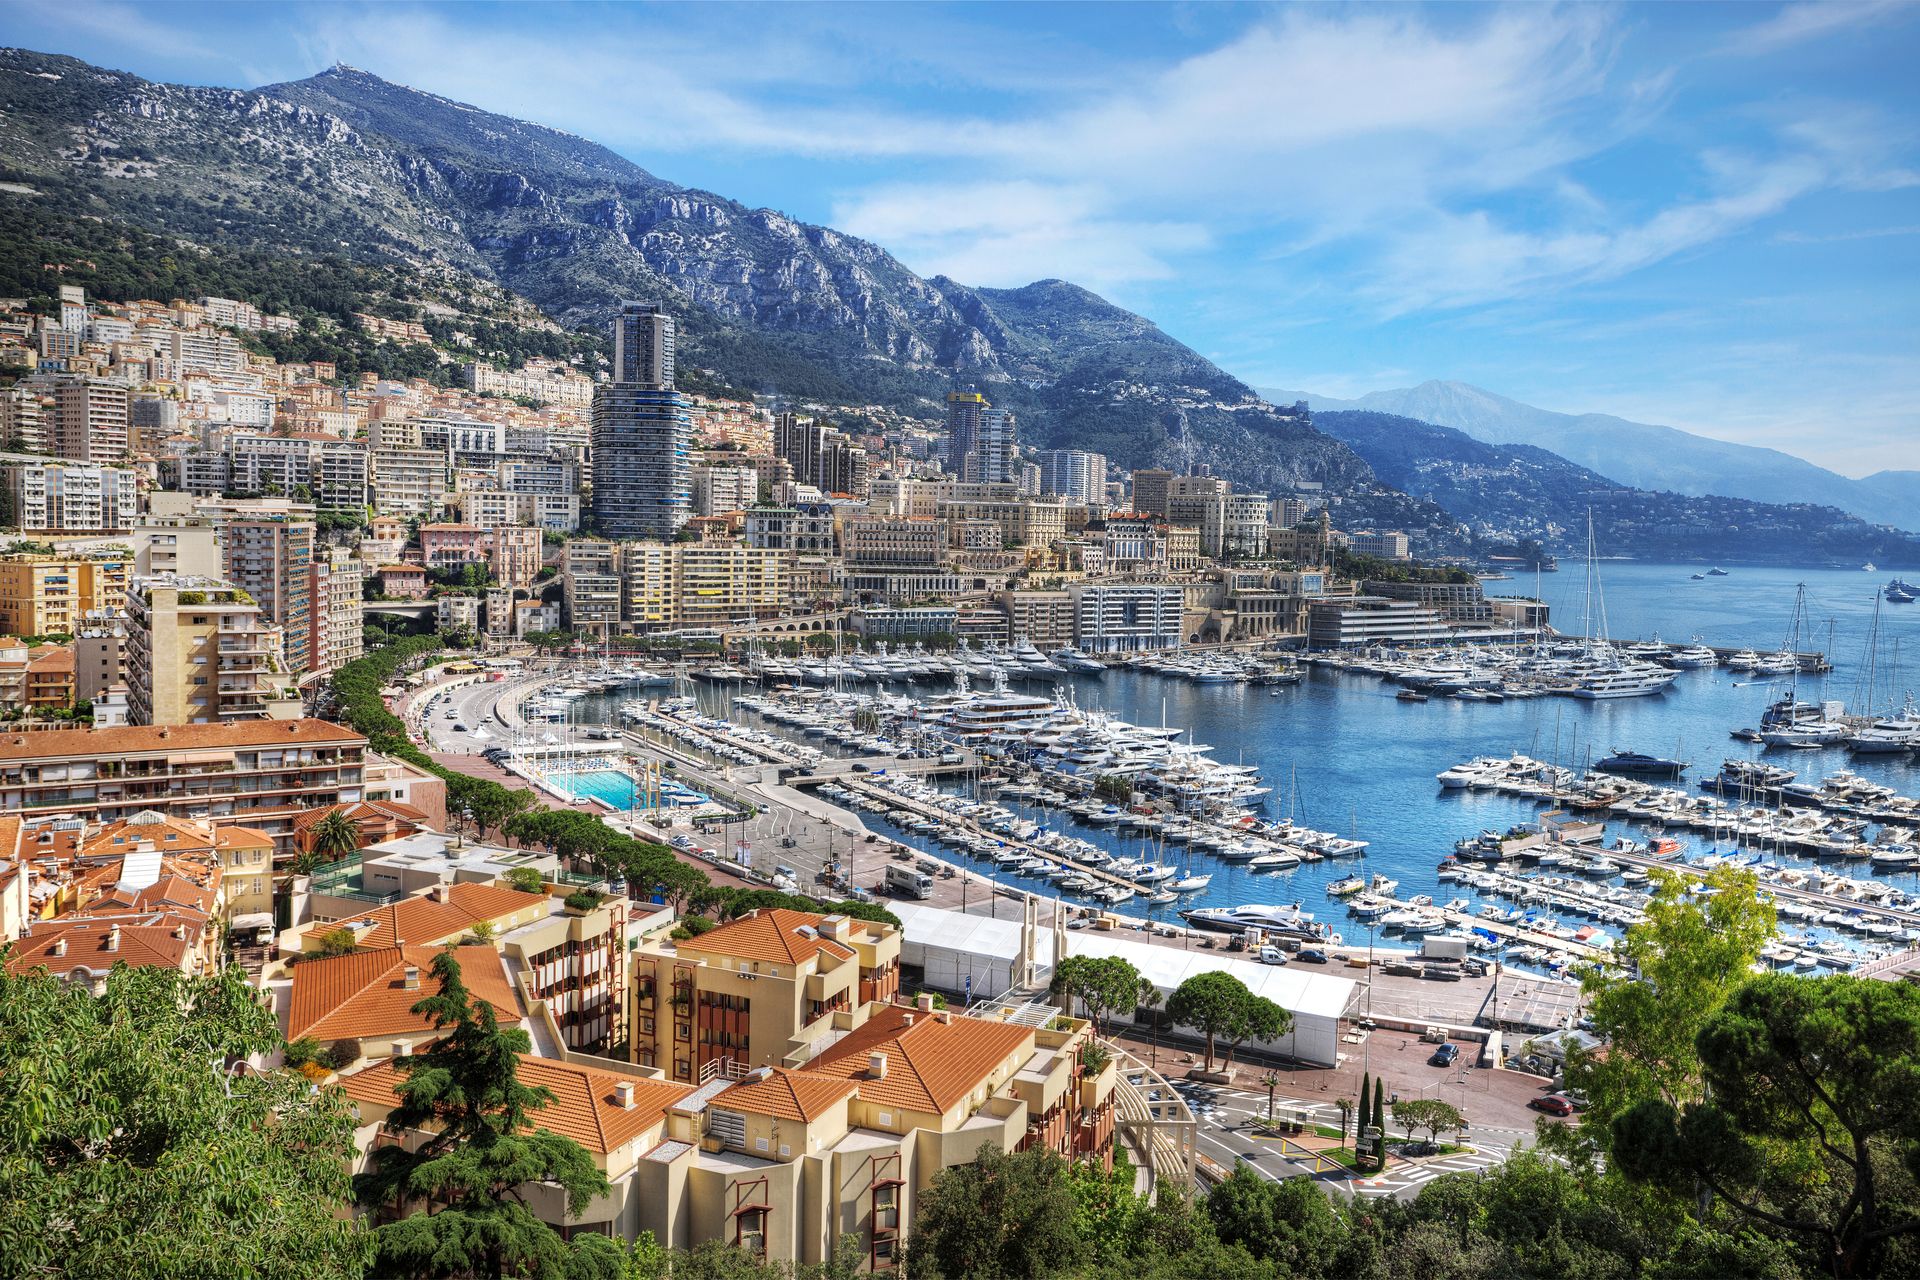 Monaco: 87.01 years